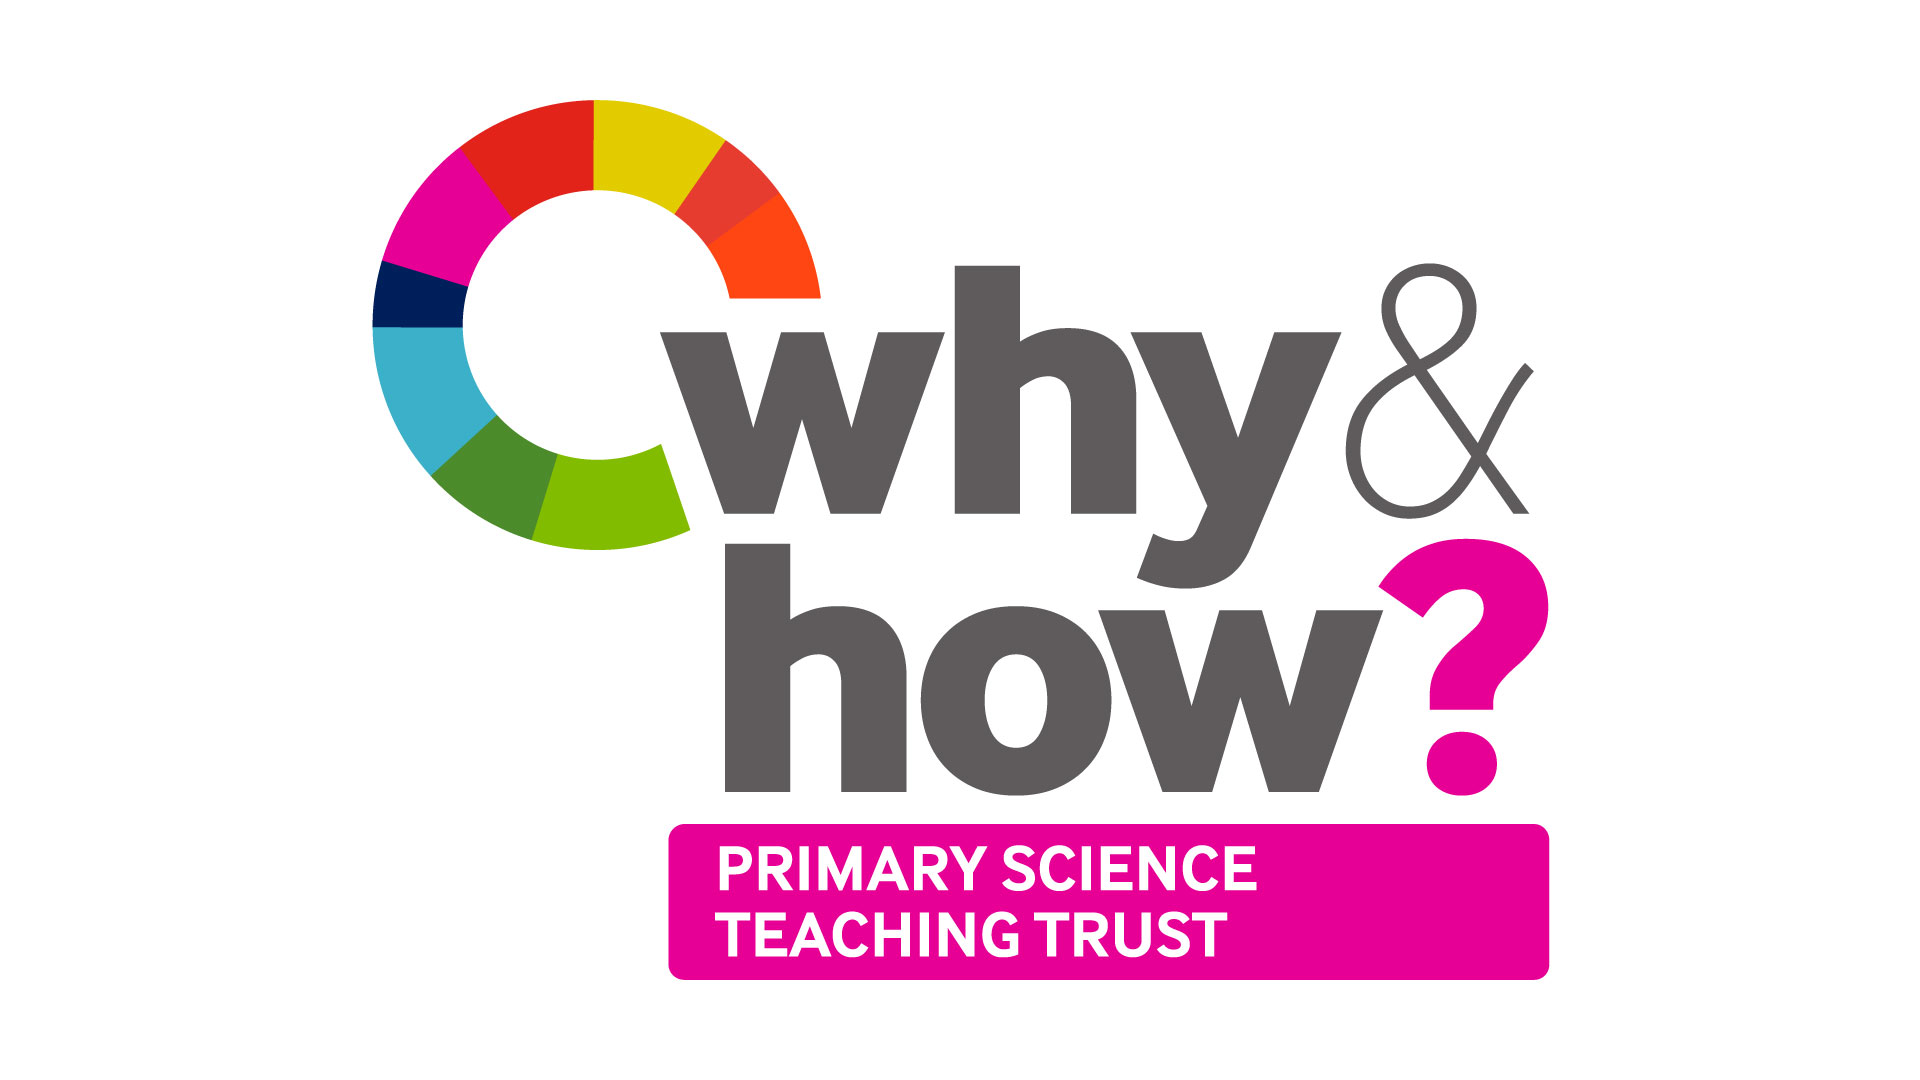 Primary Science Teaching Trust